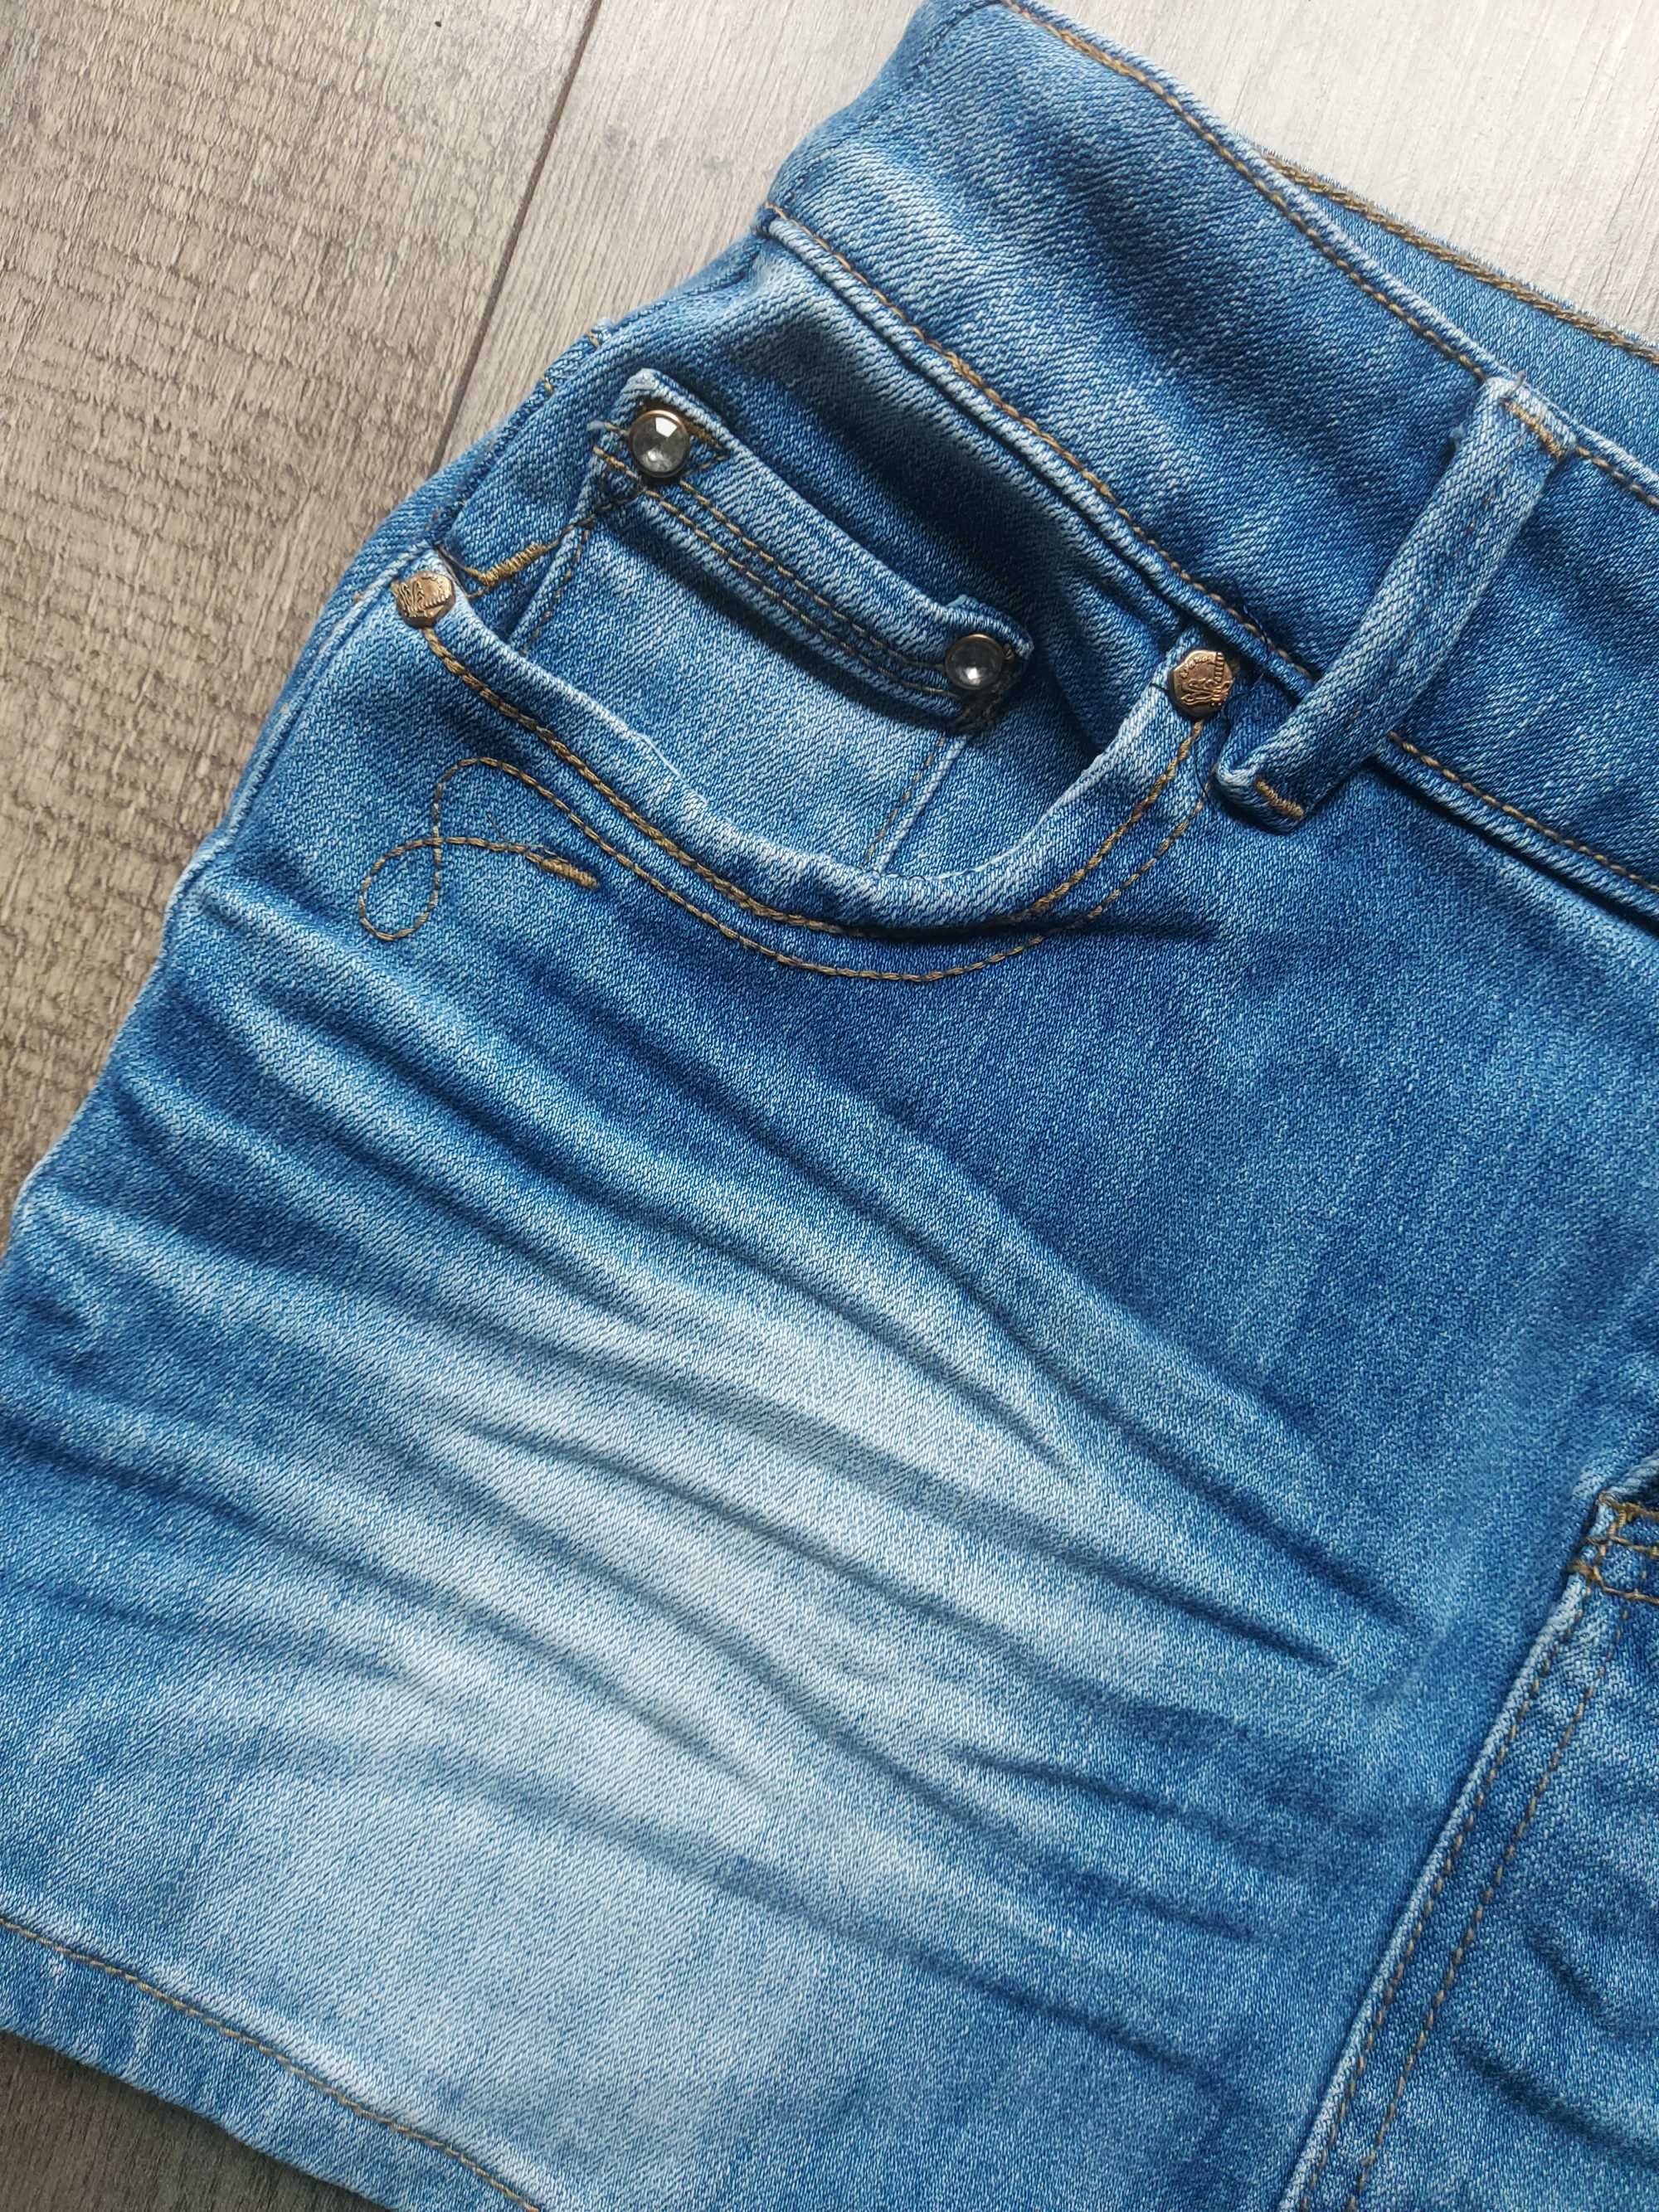 Spódniczka spódnica damska jeans jeansowa krótka modna mini